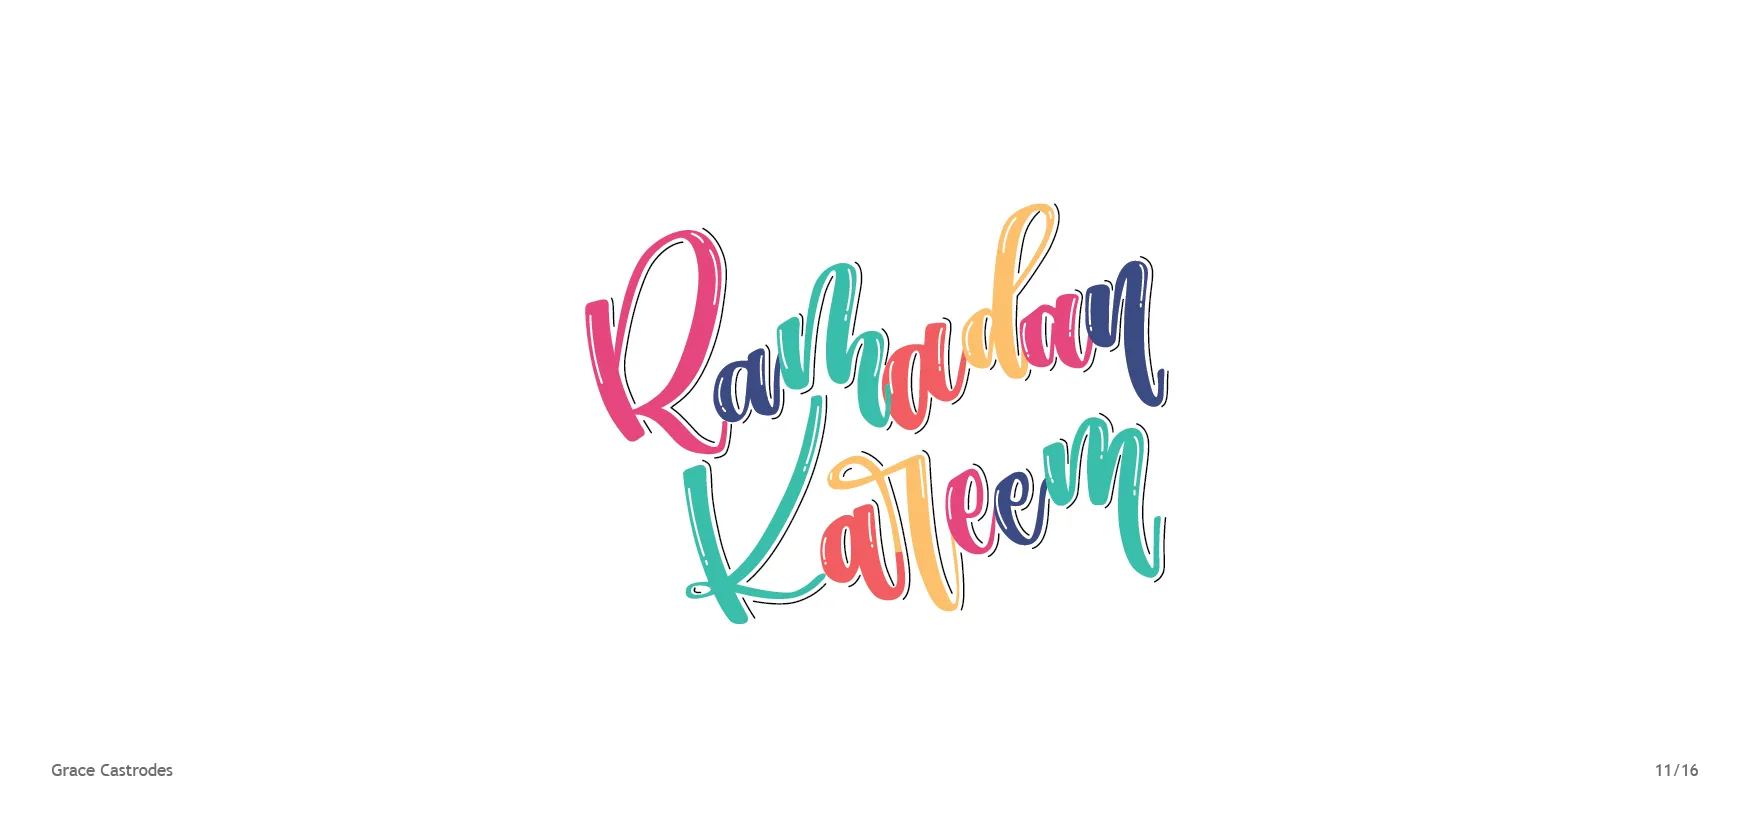 ramadan background vector